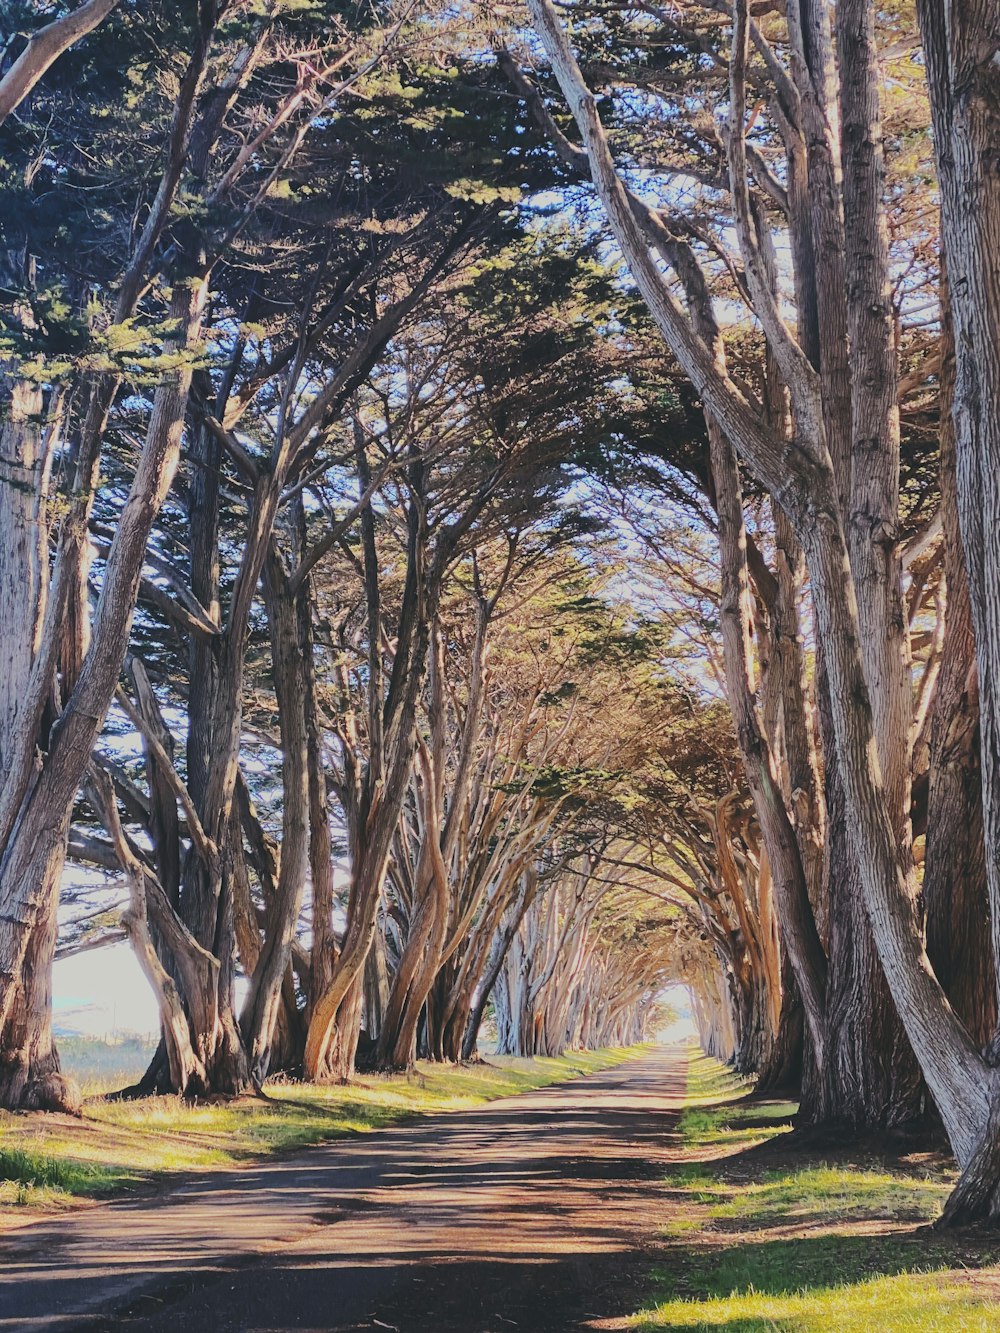 road between trees